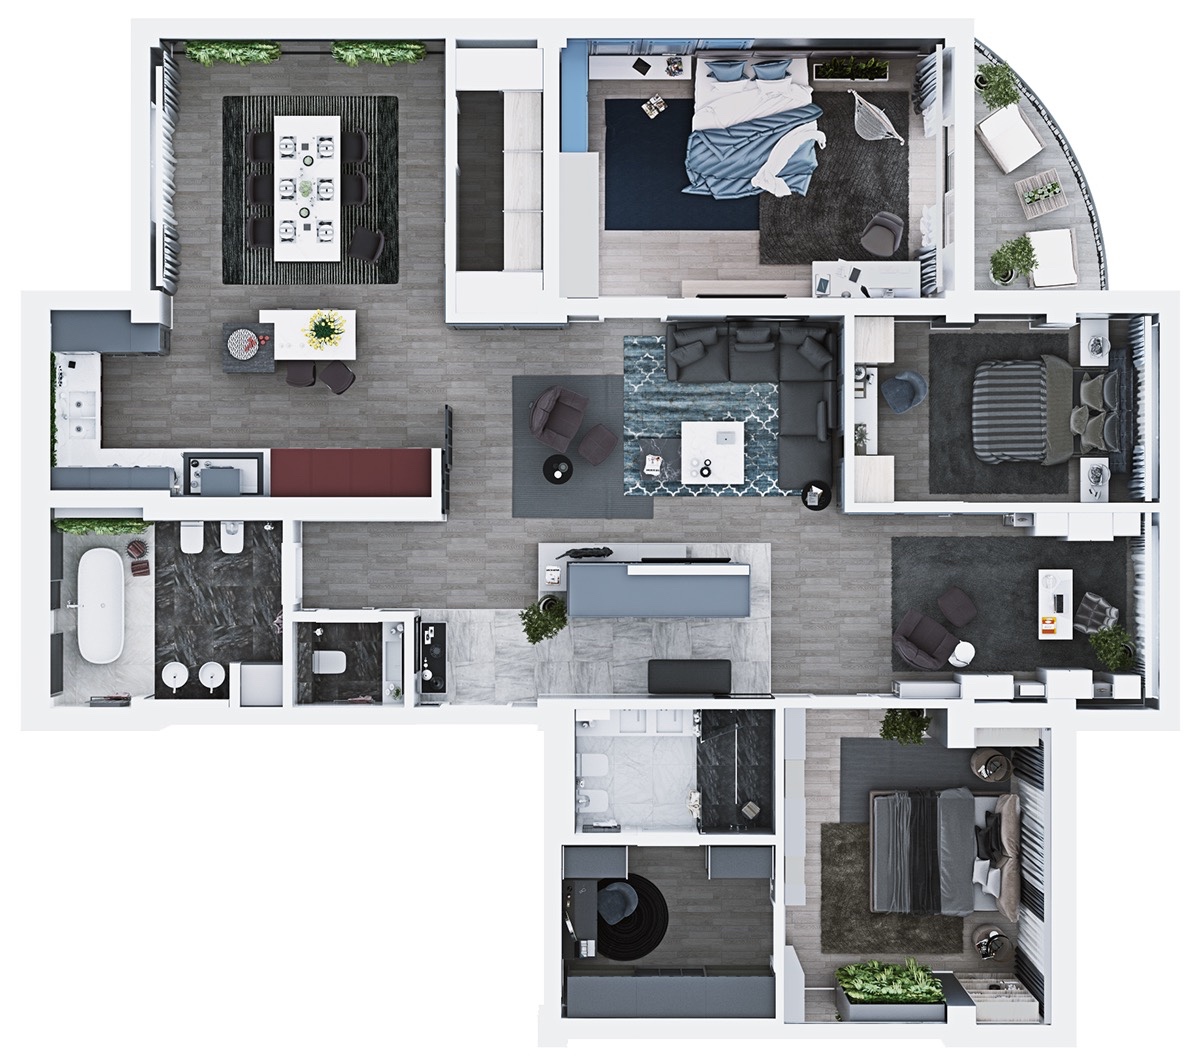 Luxury 3 Bedroom Apartment Design Under 2000 Square Feet (Includes 3D